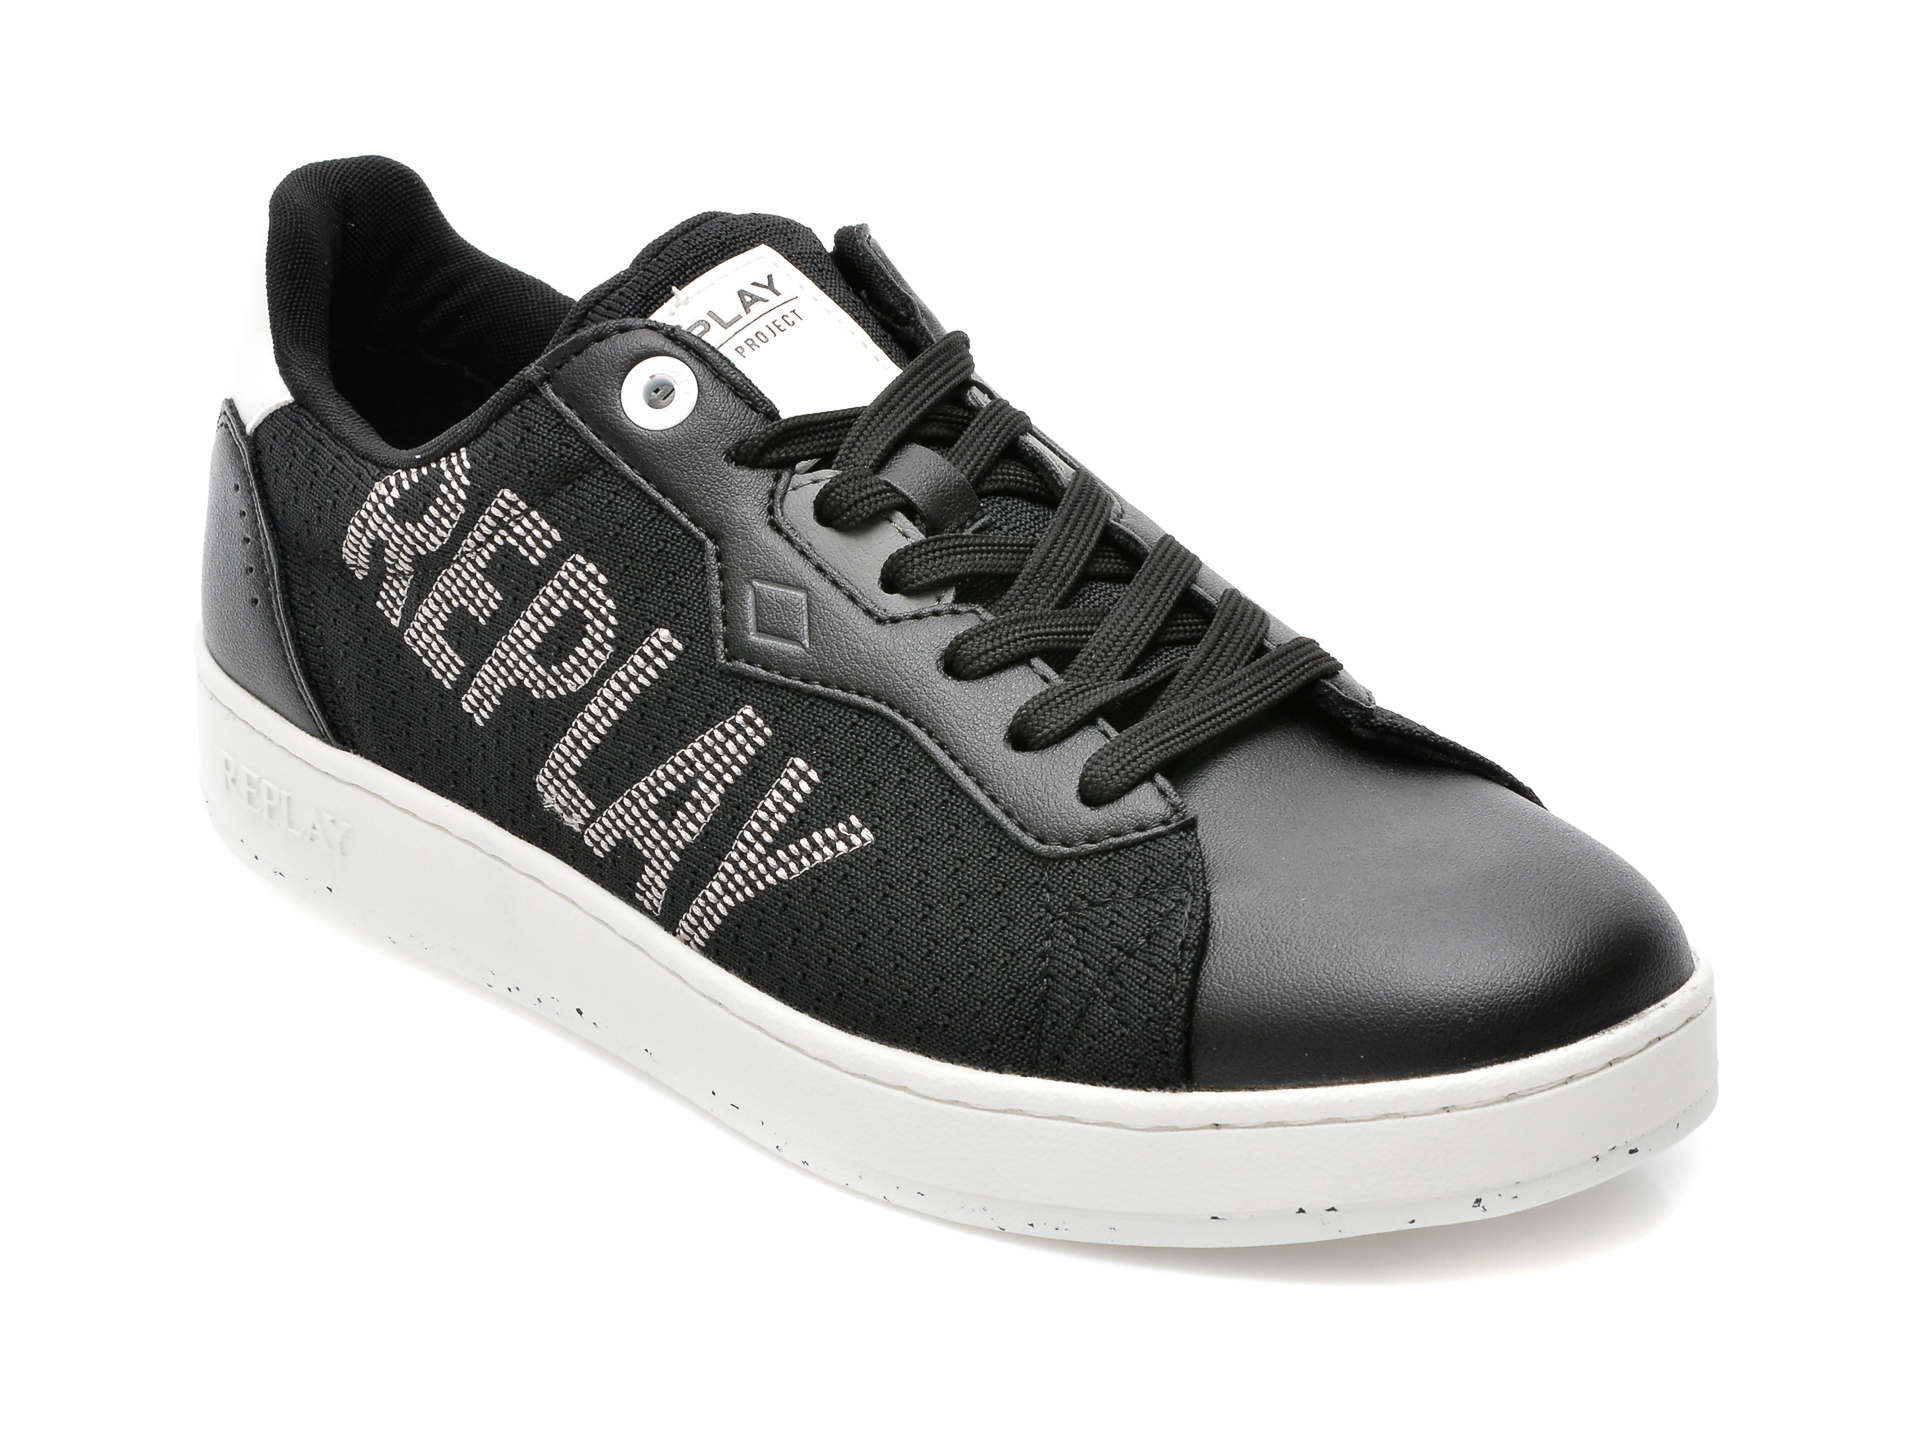 Pantofi Sport Replay Negri, Mz2v17t, Din Material Textil Si Piele Ecologica